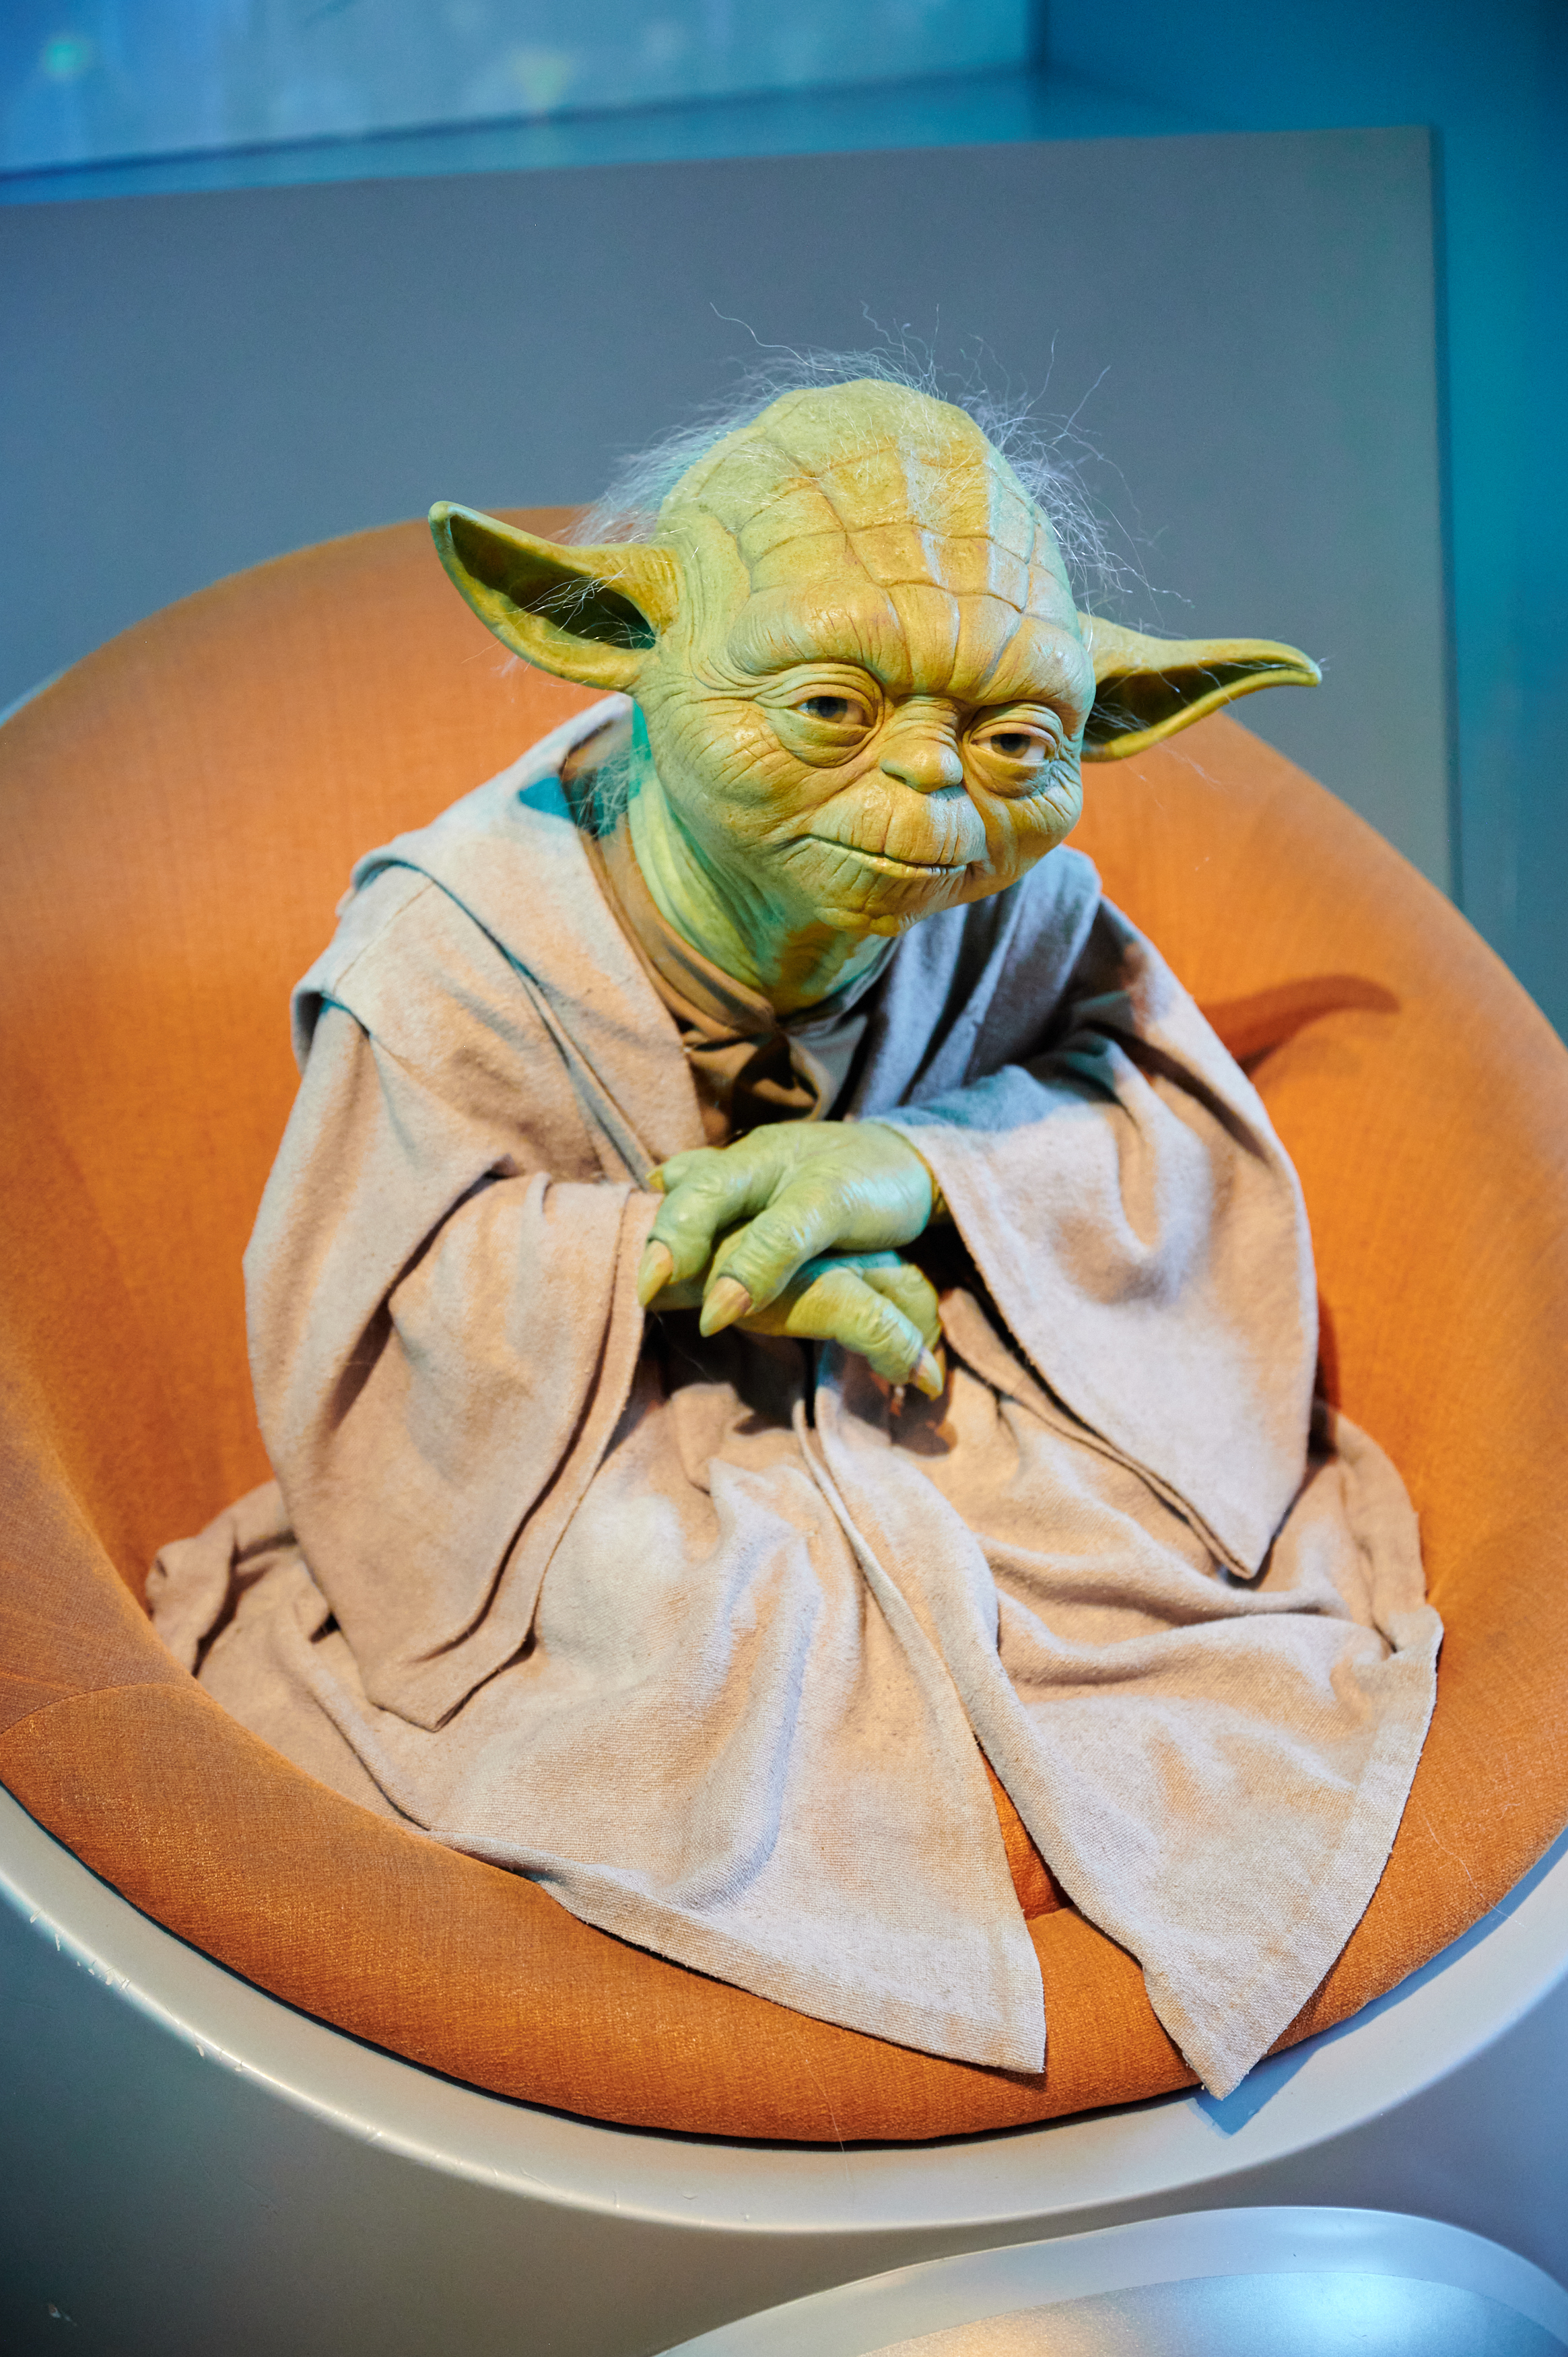 Meet Yoda at Madame Tussauds Berlin